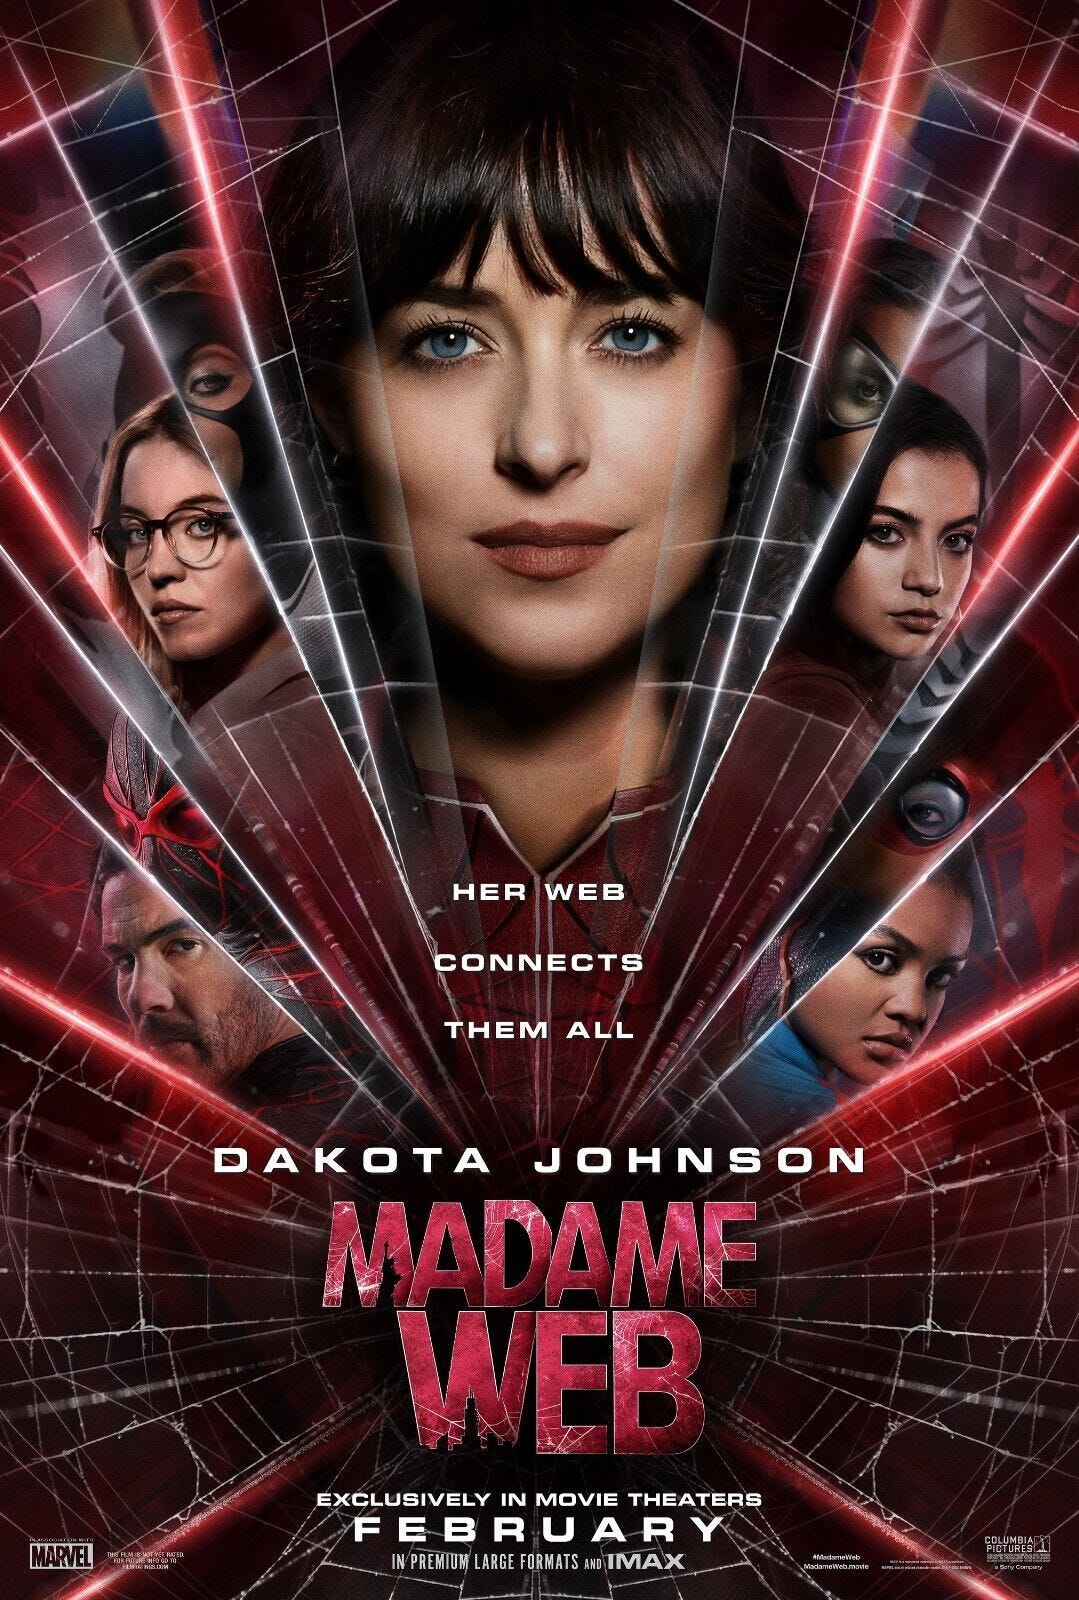 Madame Web movie poster (b) - 11" x 17" - Dakota Johnson - Picture 1 of 1